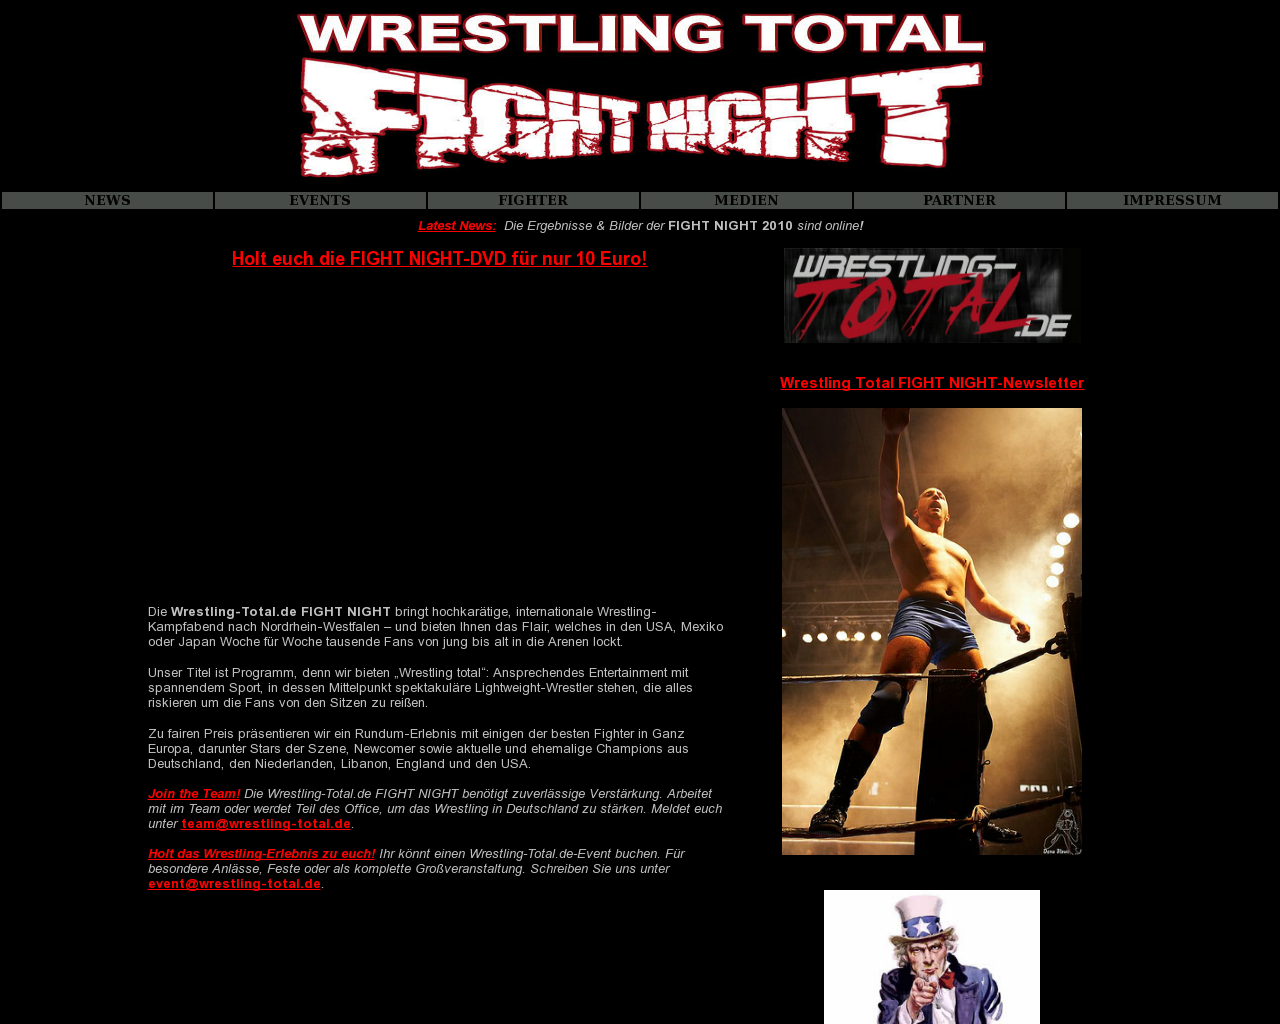 Bild Website wrestling-total.com in 1280x1024